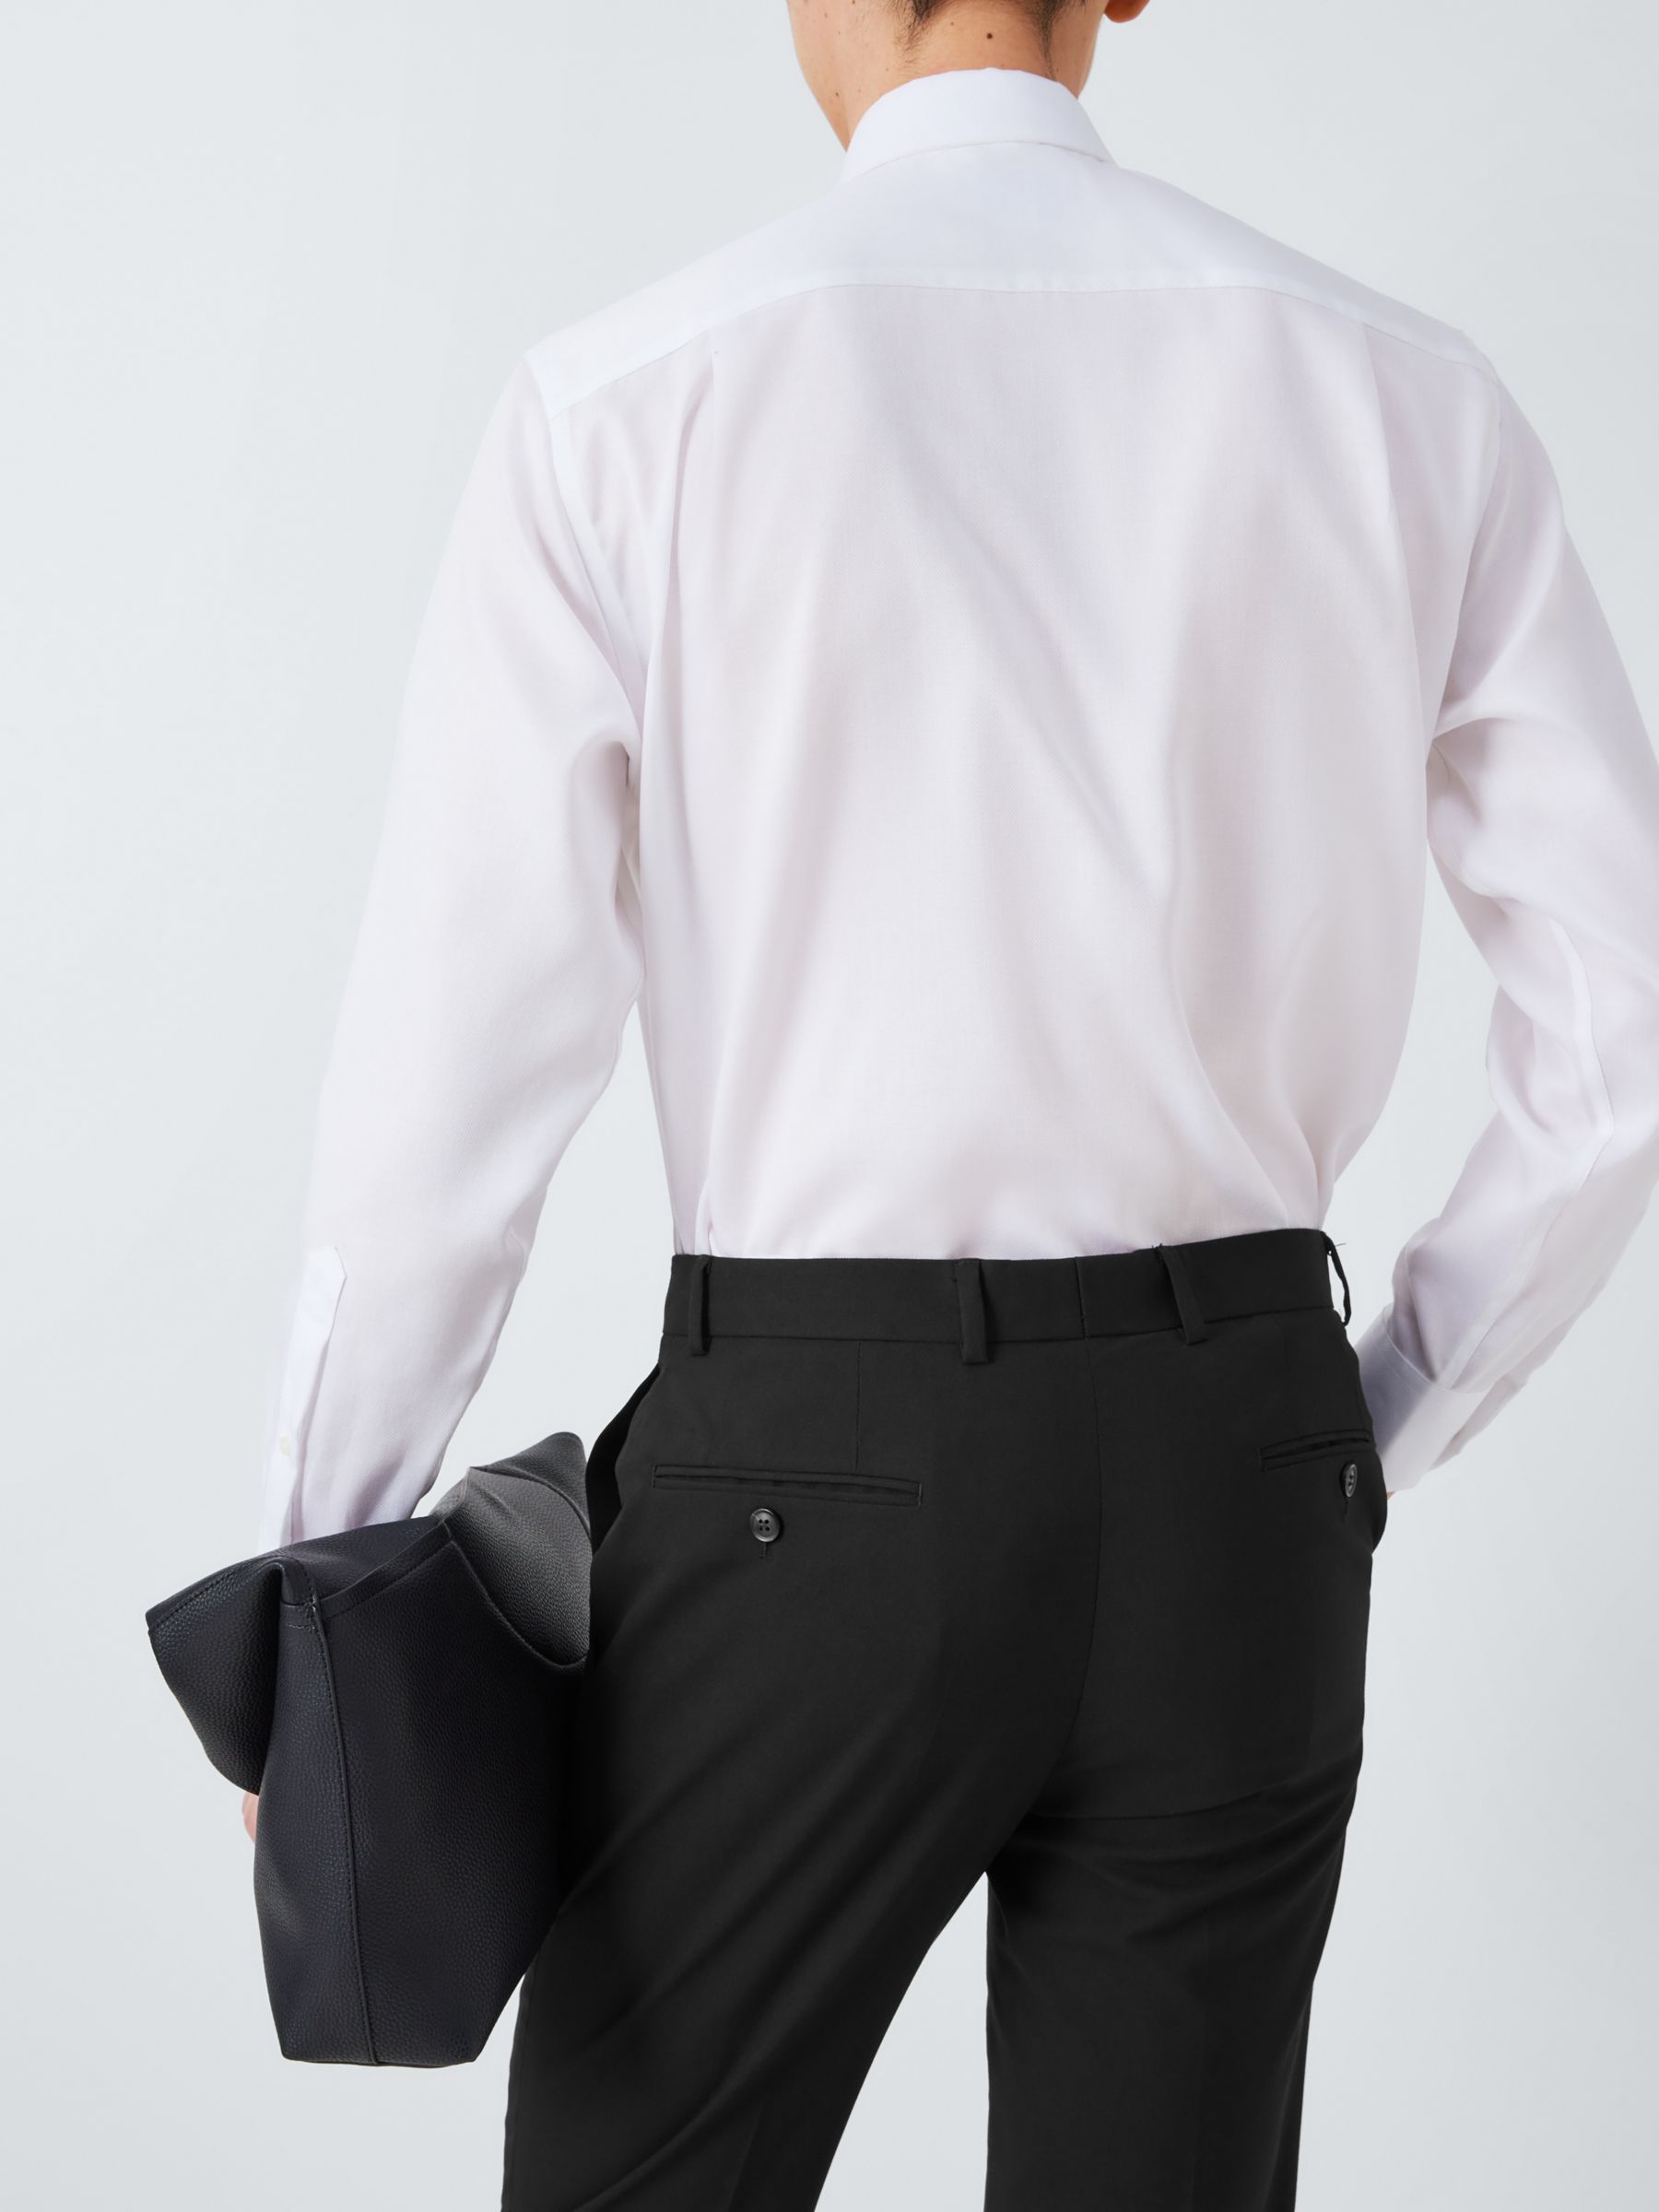 John Lewis Slim Fit Starter Suit Trousers, Black, 30R